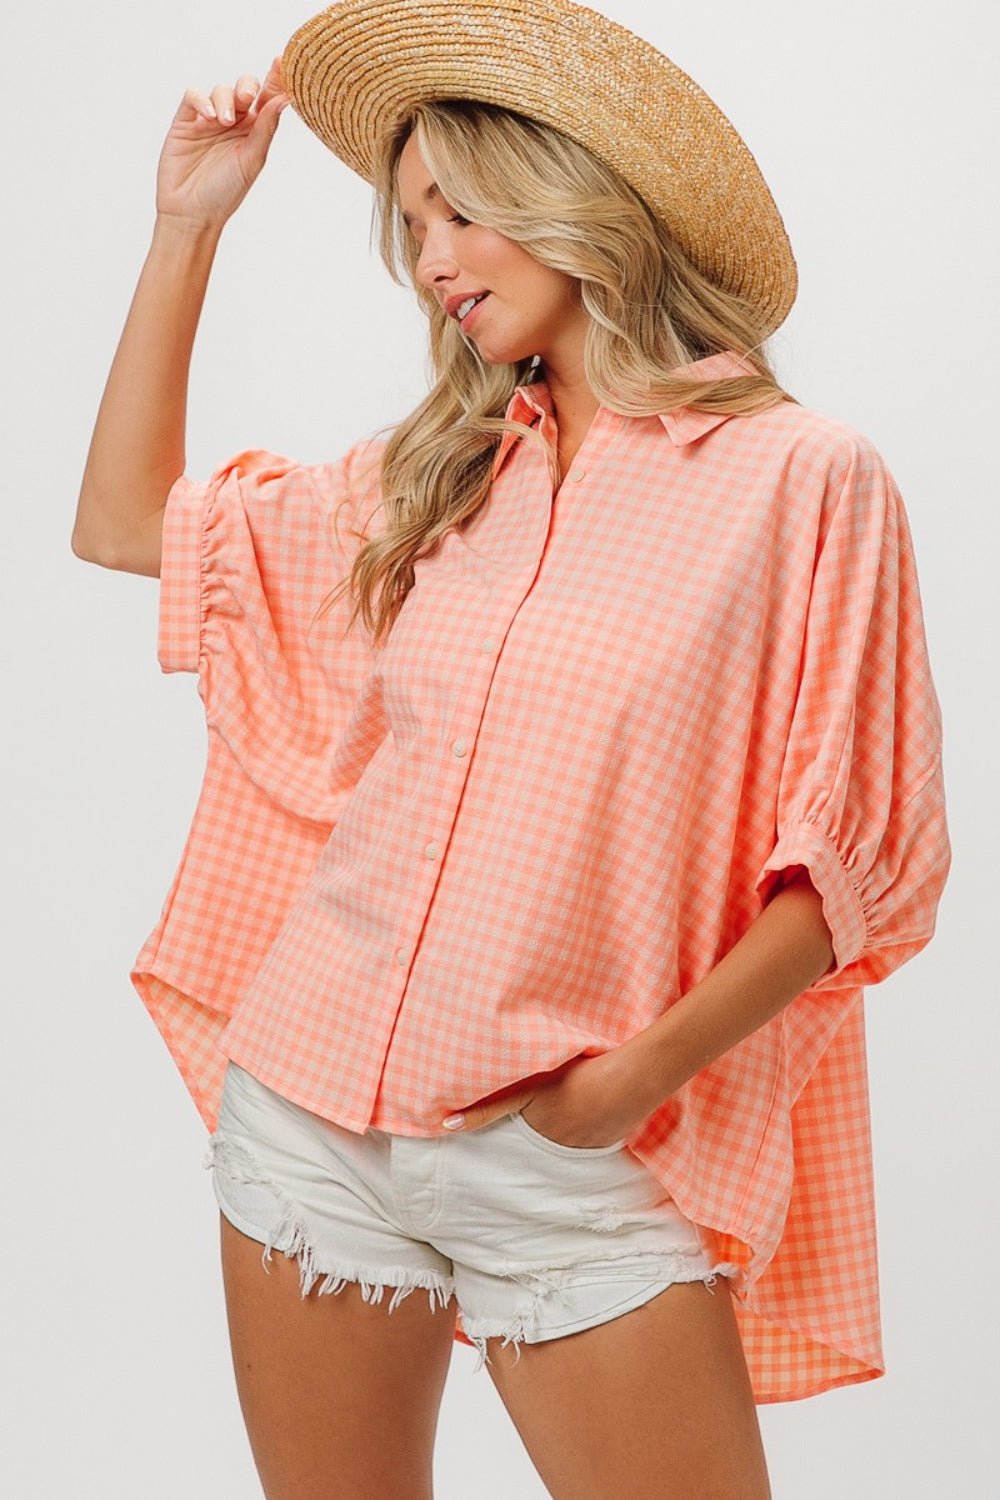 Plaid Dolman Sleeve Shirt in Blush/Light CoralShirtBiBi